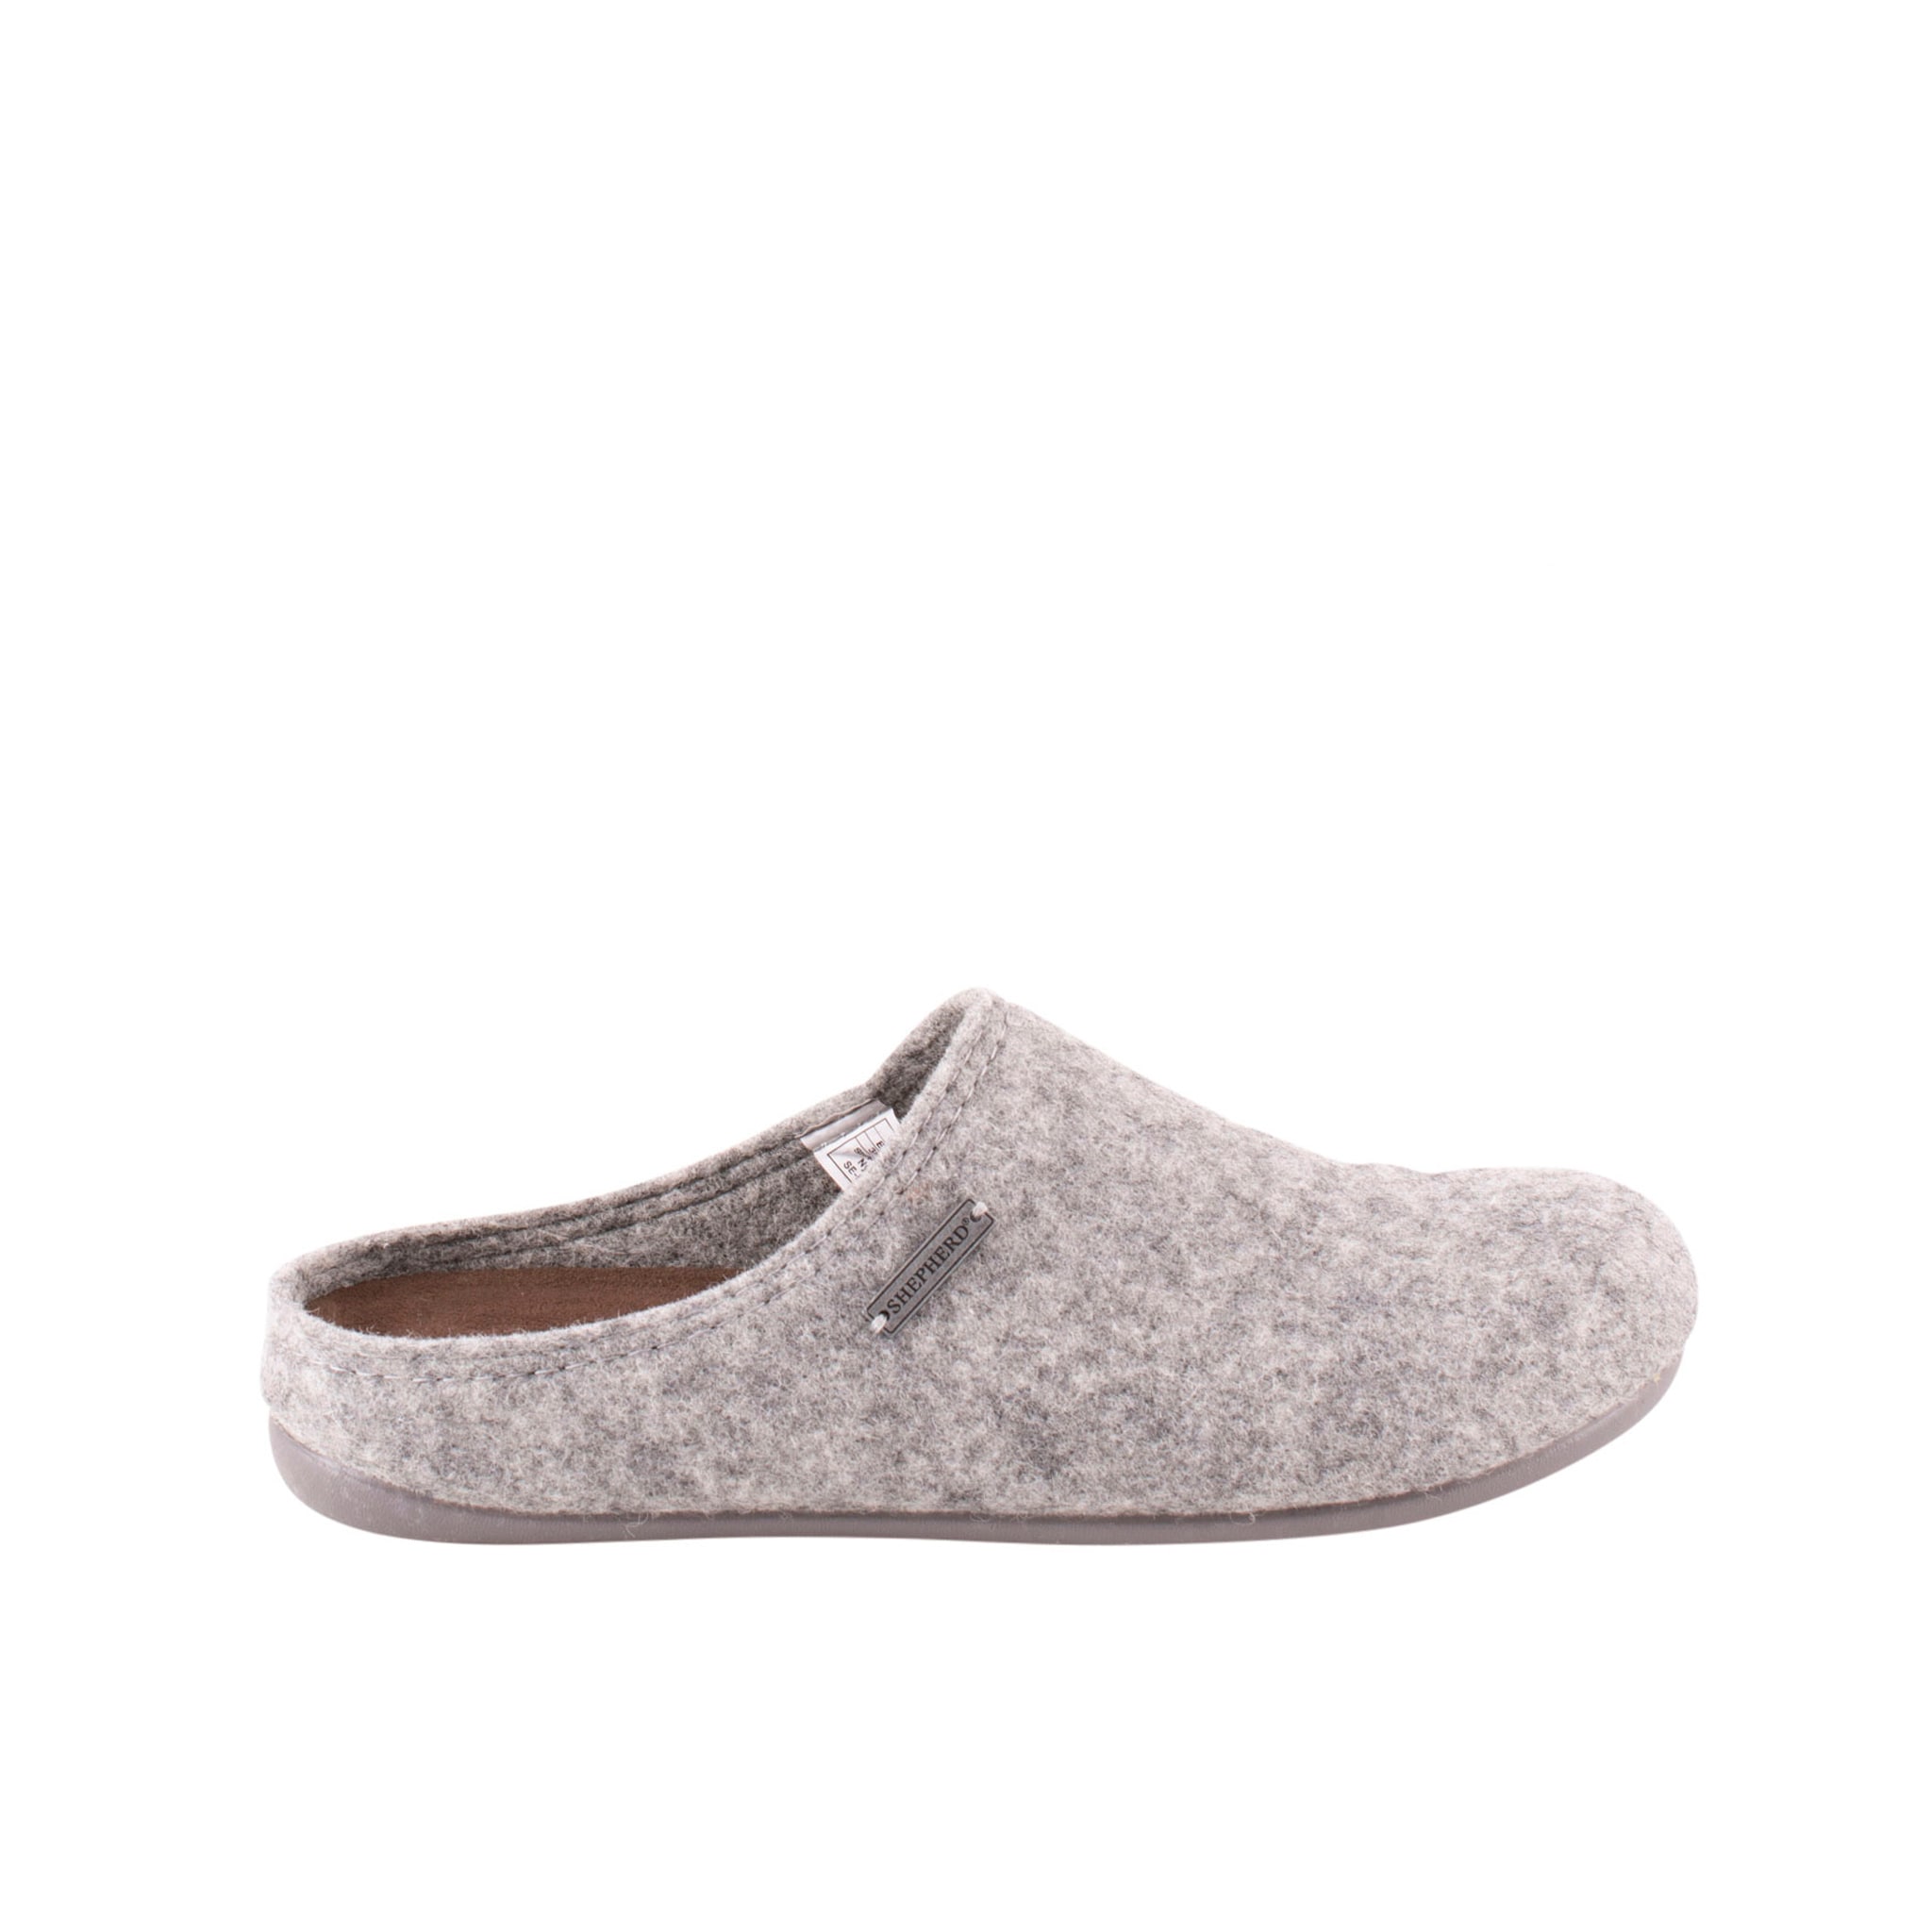 Cilla wool slippers UNISEX